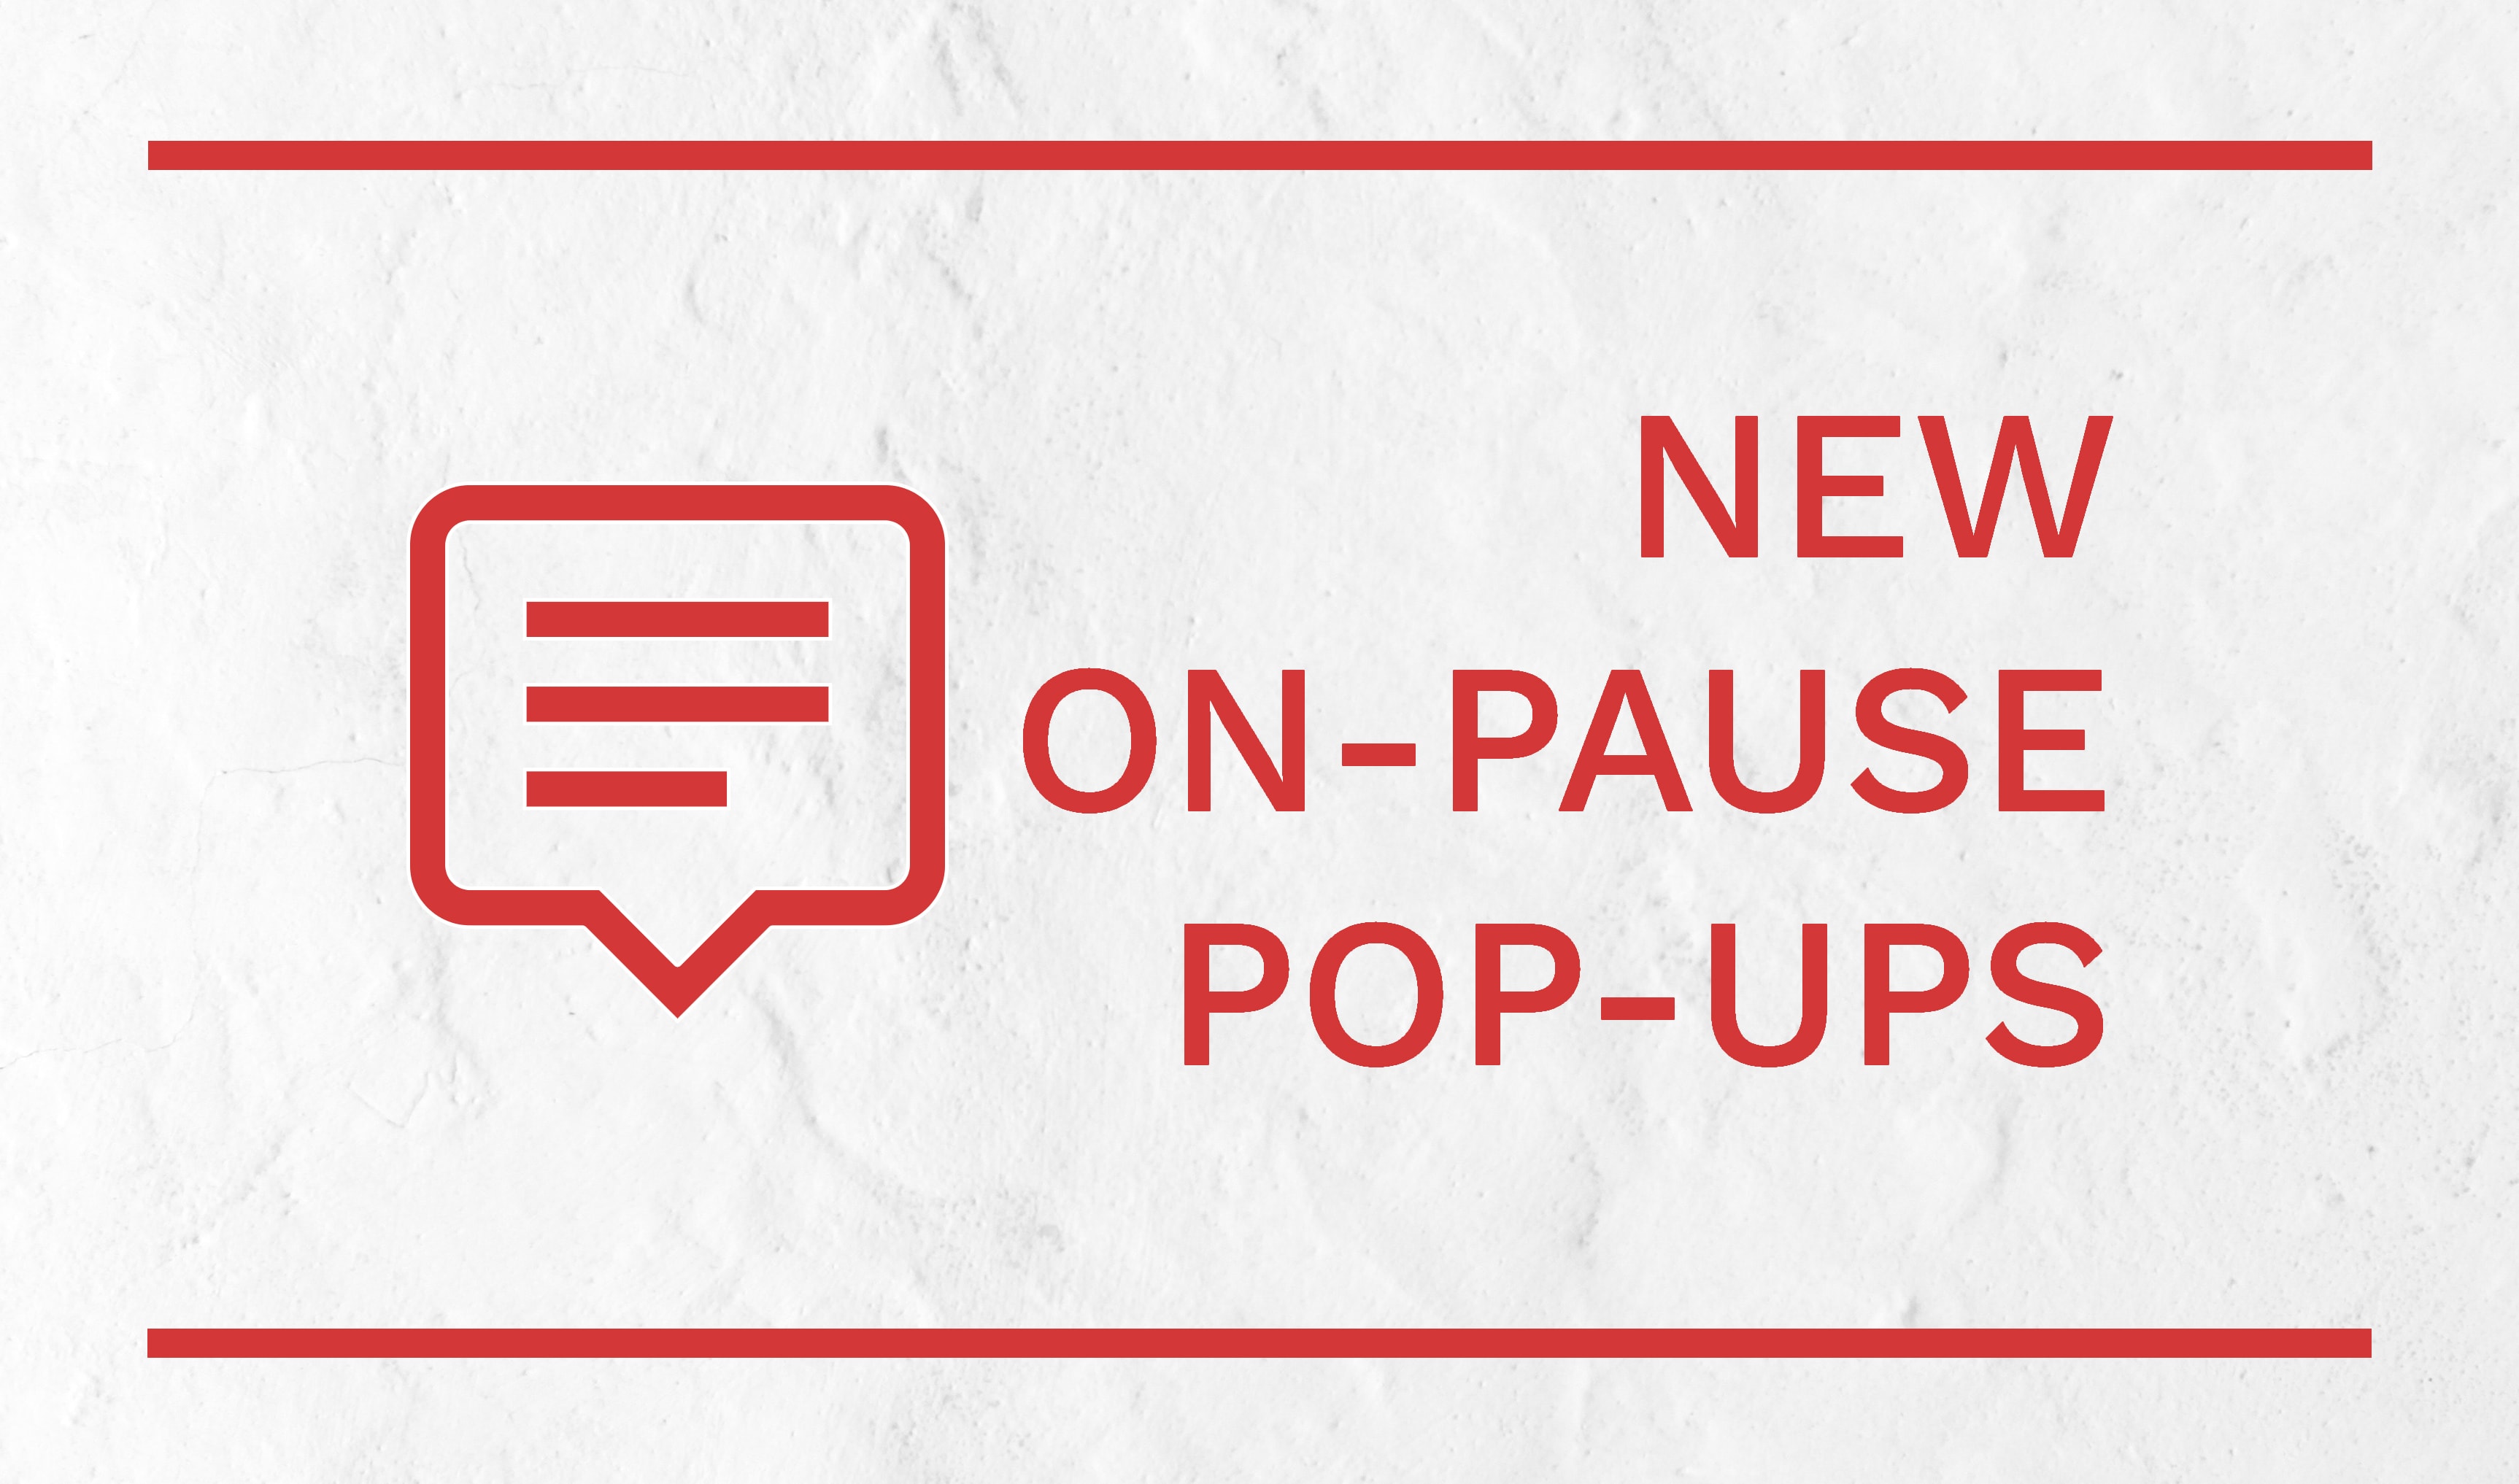 New on-pause pop-ups